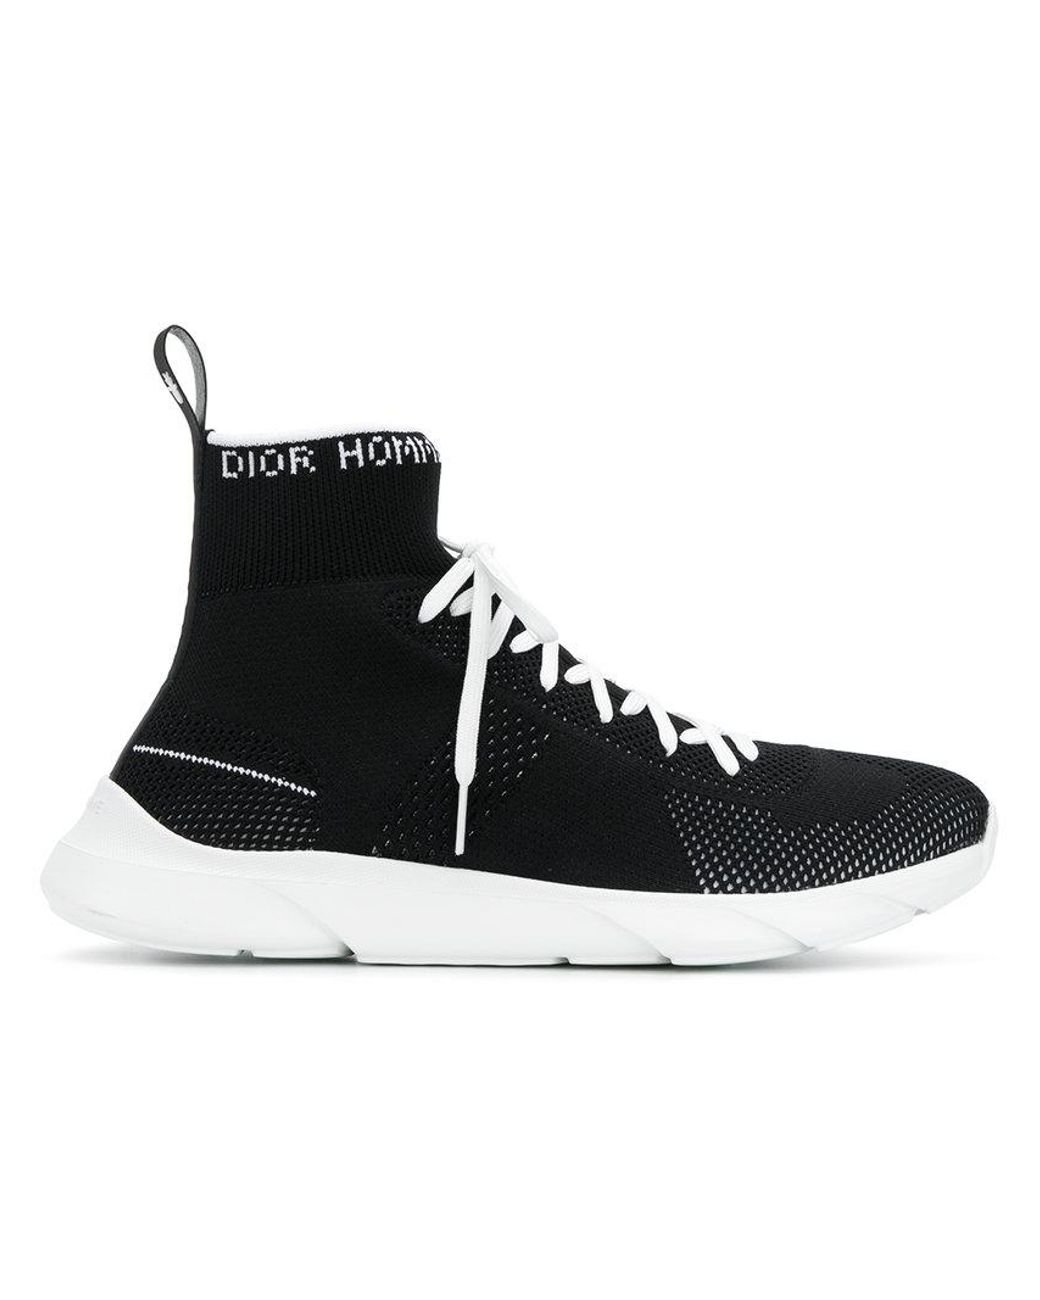 Dior Homme High Top Sneakers Black Men | Lyst